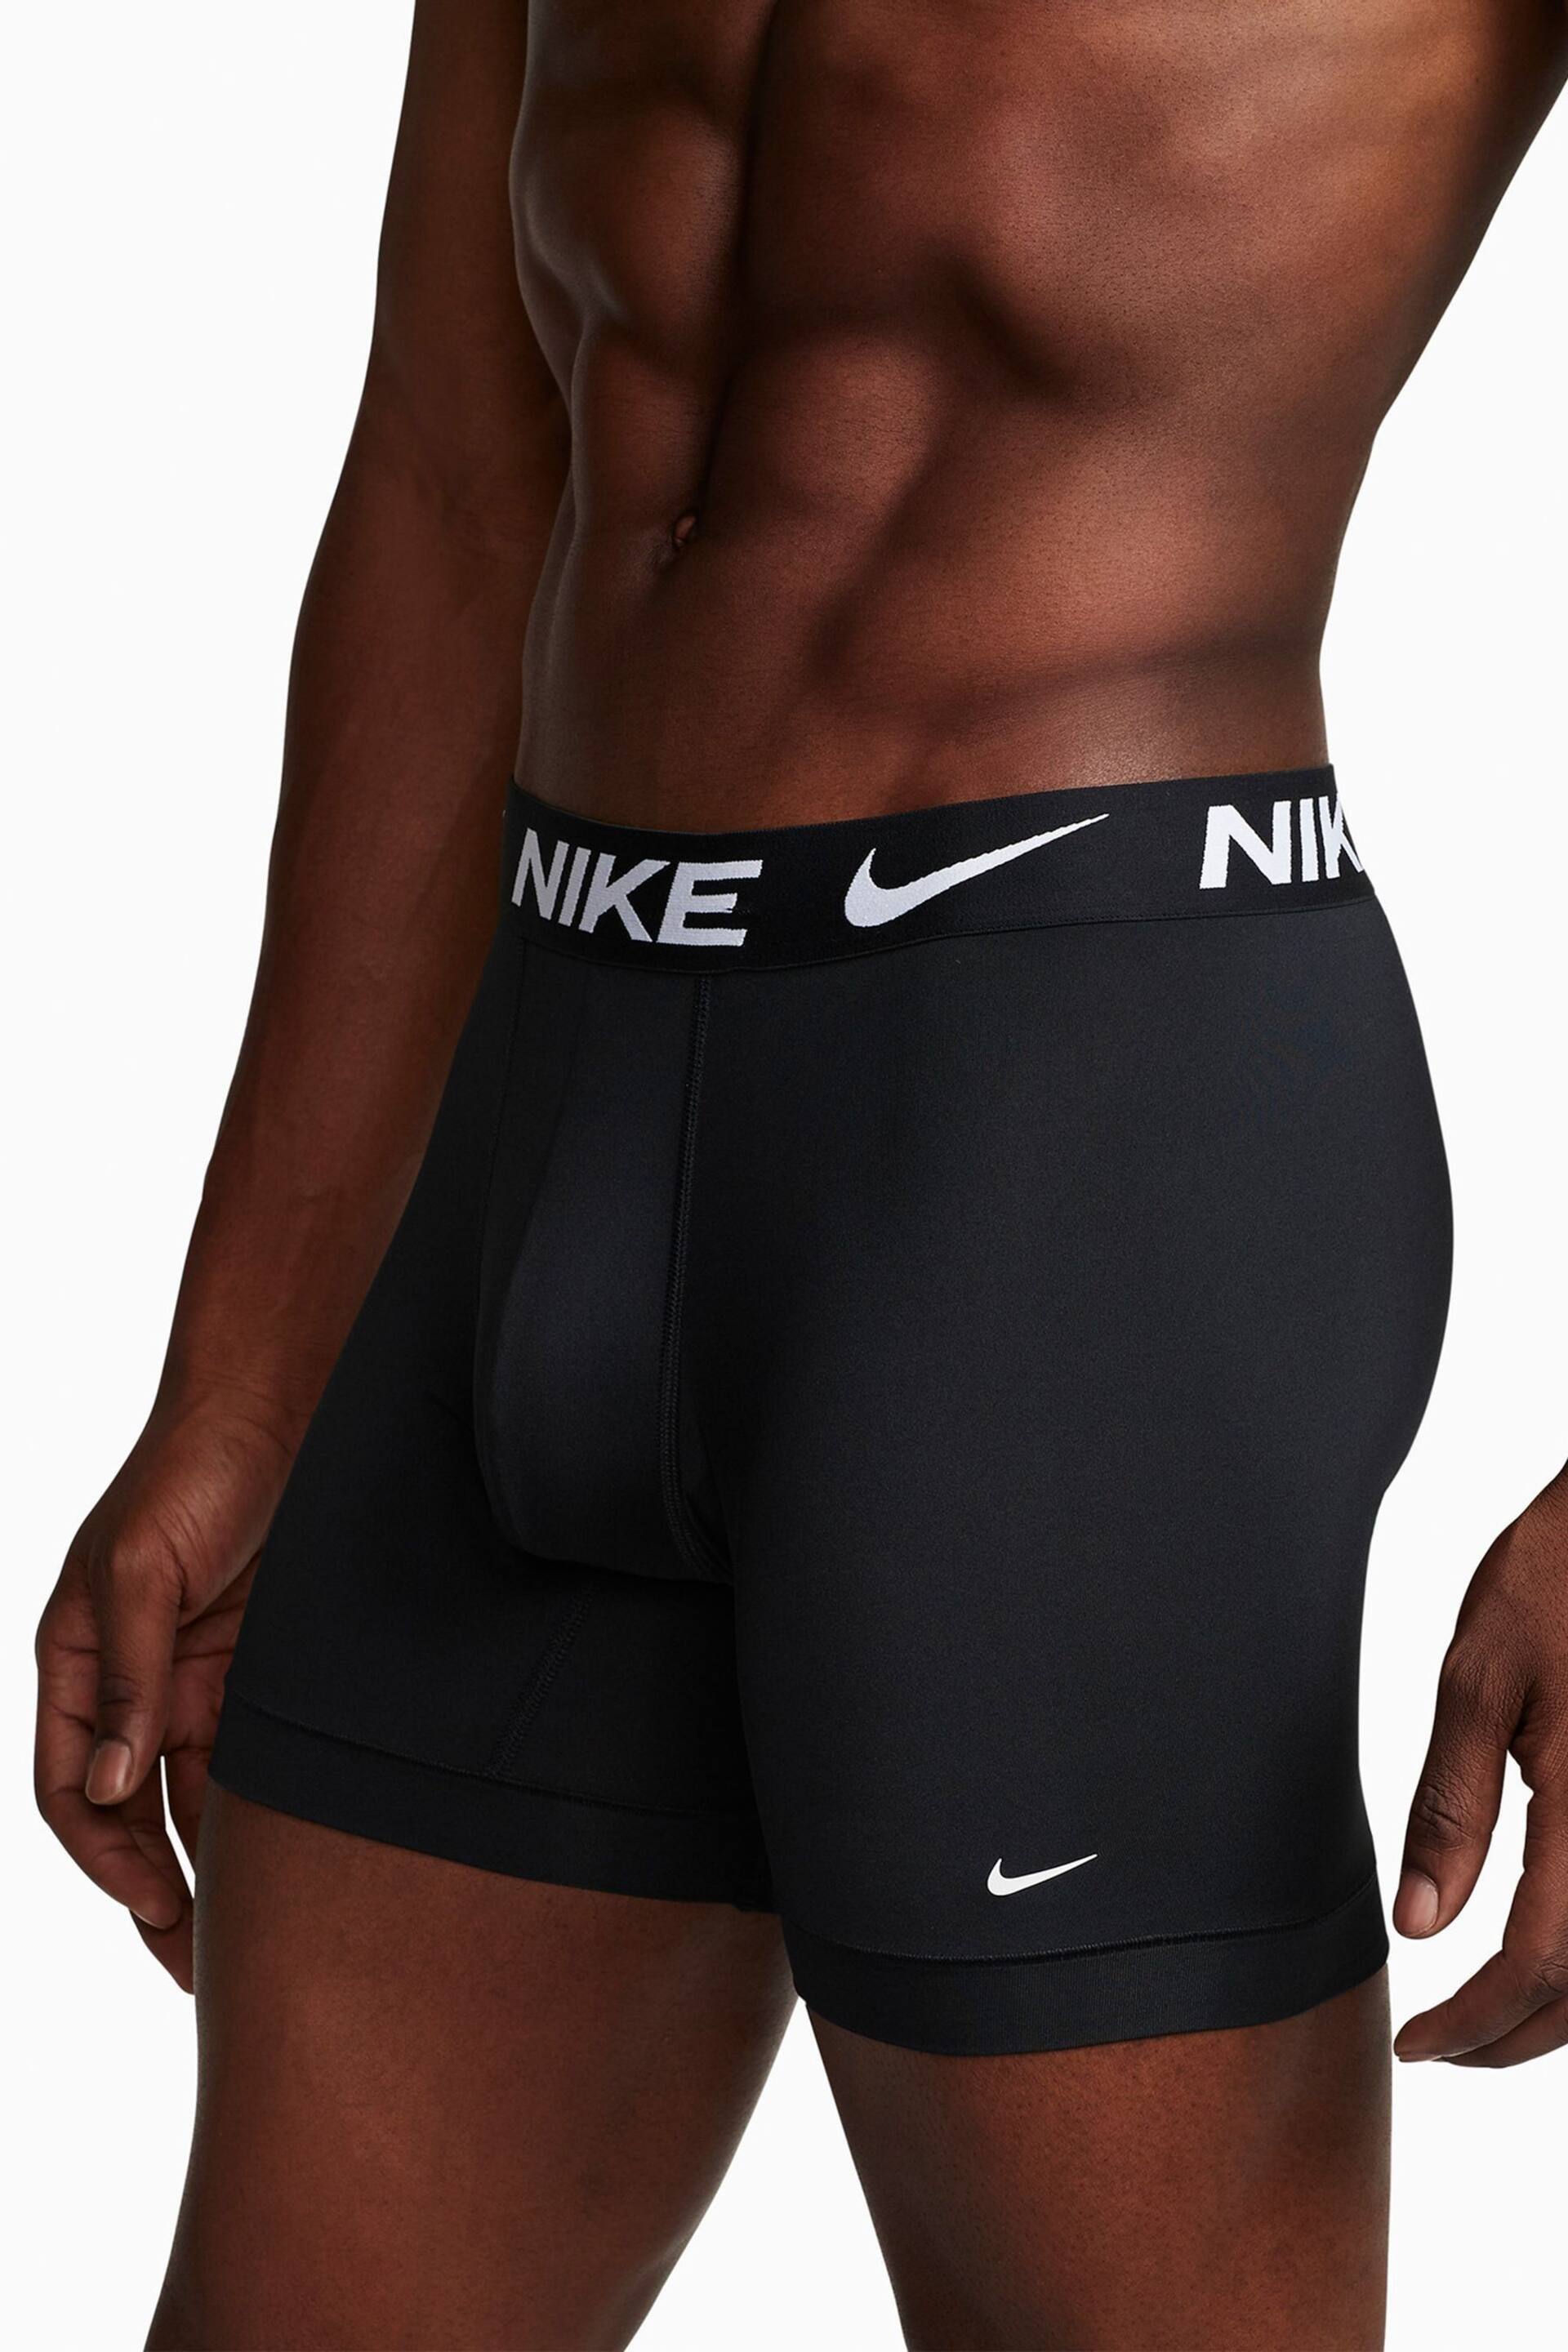 Nike DRI-Fit Essential Micro Black Boxer Briefs 3 Pack - Image 2 of 4